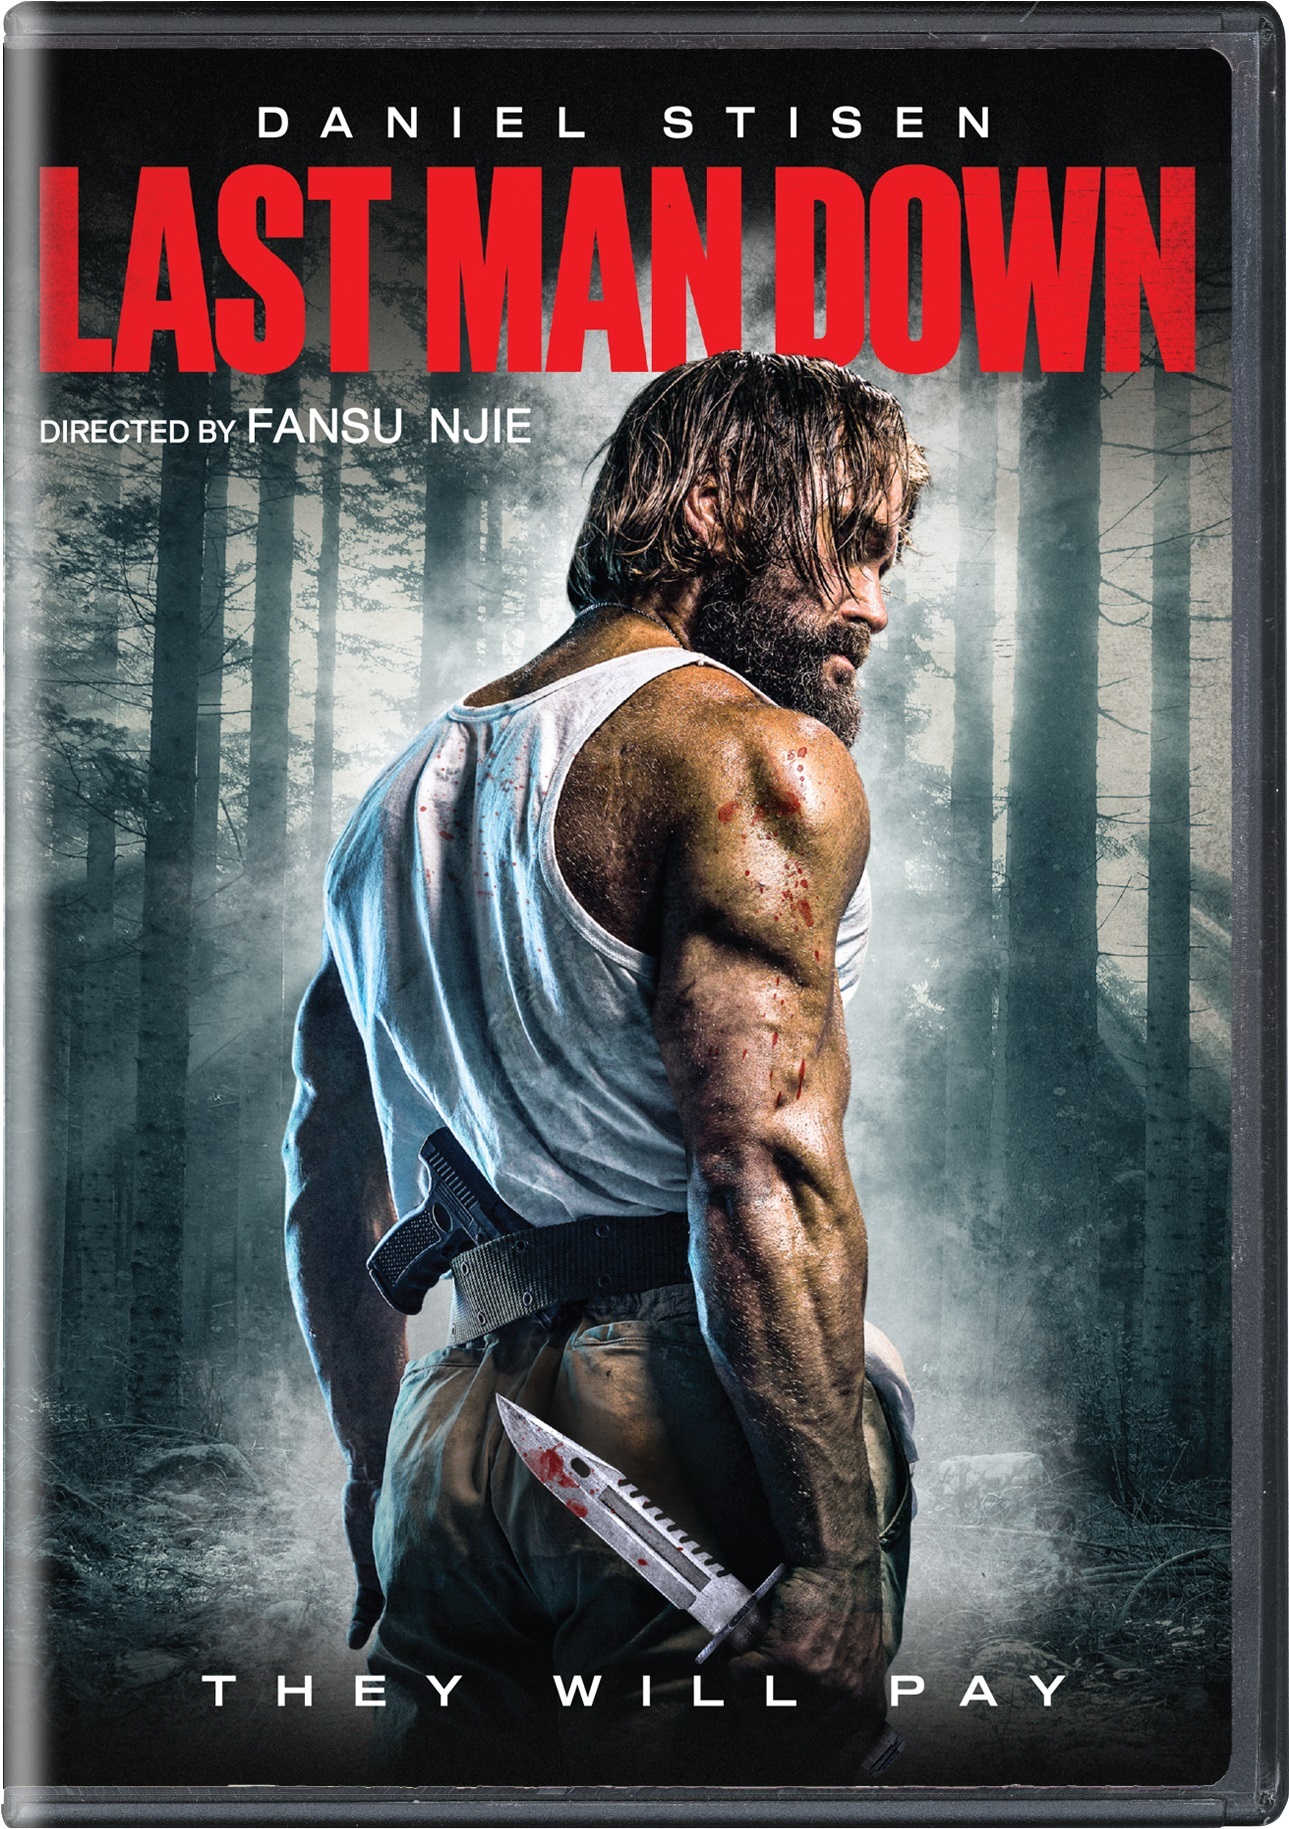 Last Man Down - DVD [ 2021 ]  - Thriller Movies On DVD - Movies On GRUV